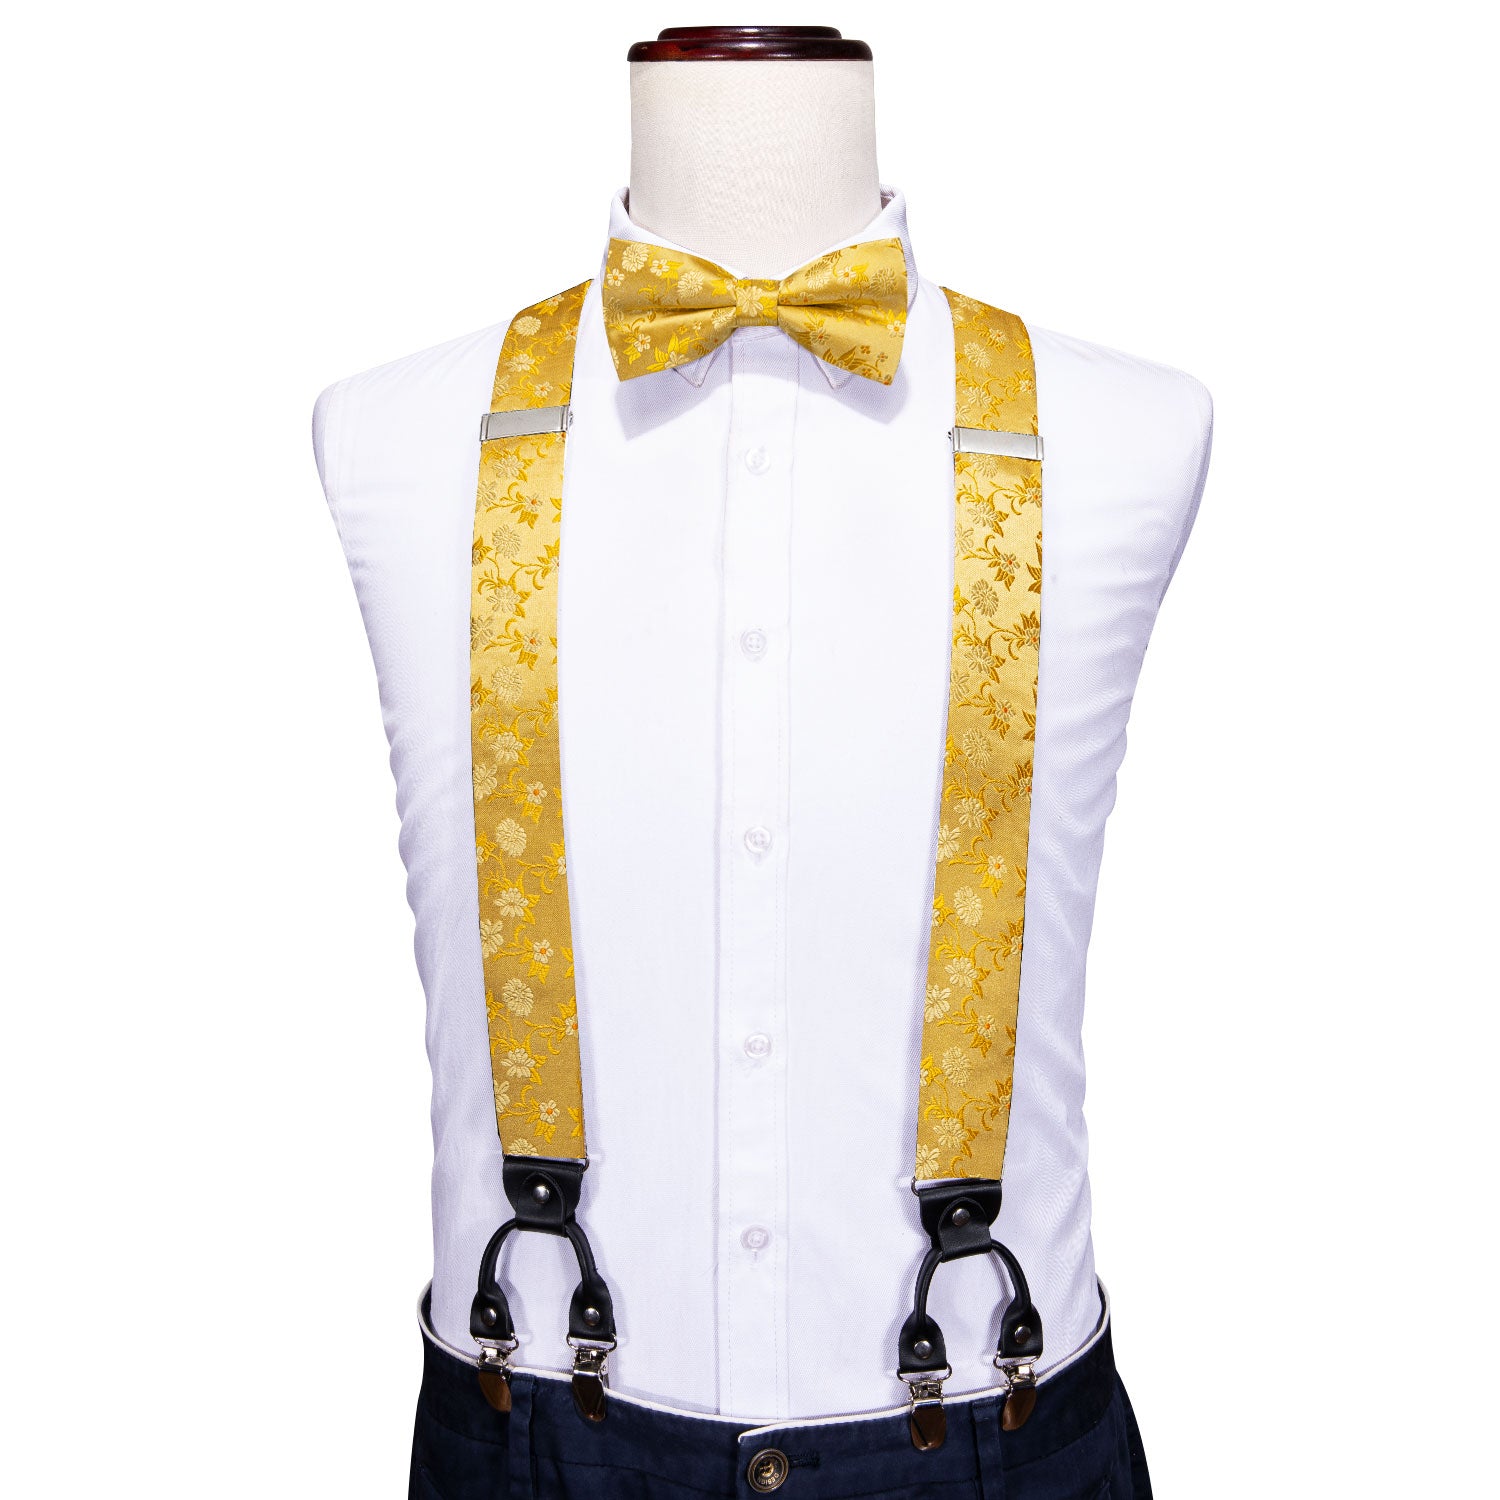 Gold Tie Flower Y Back Adjustable Suspenders Bow Tie